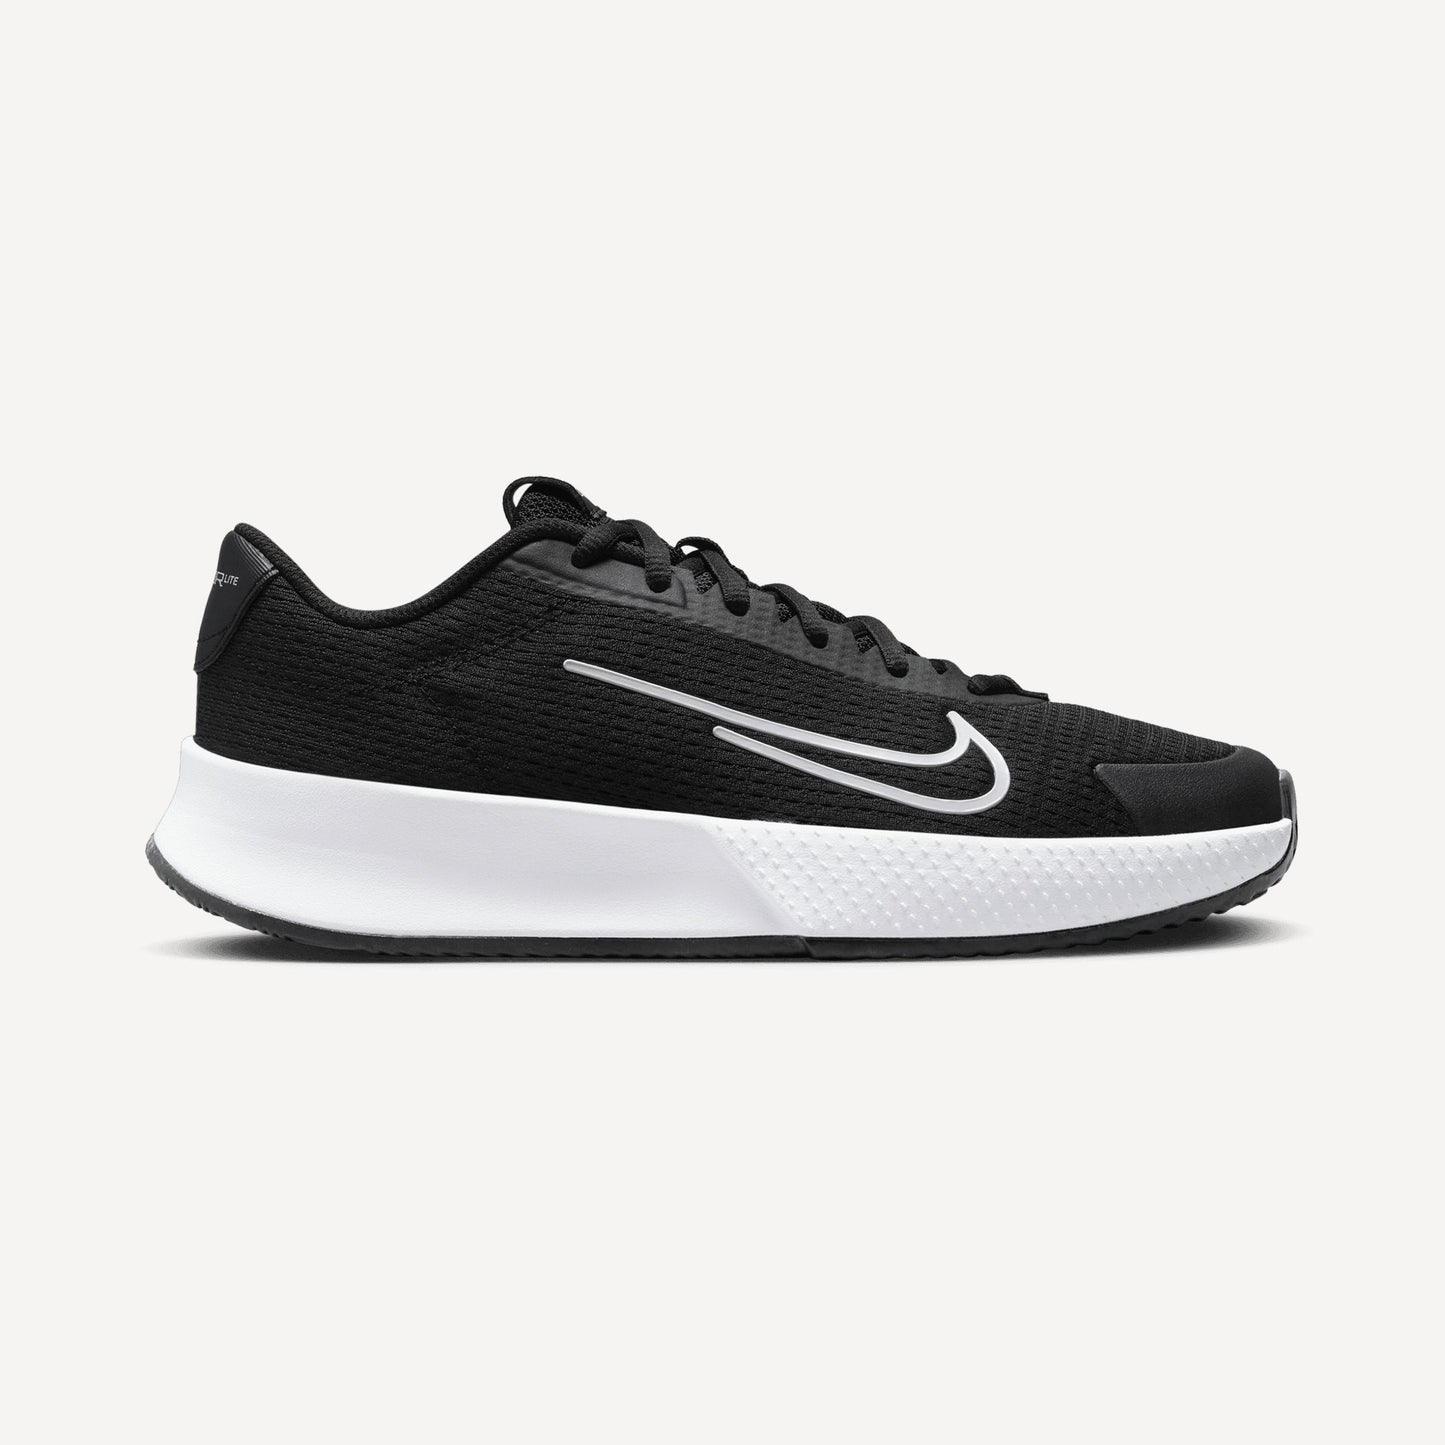 NikeCourt Vapor Lite 2 Women's Clay Court Tennis Shoes Black (1)